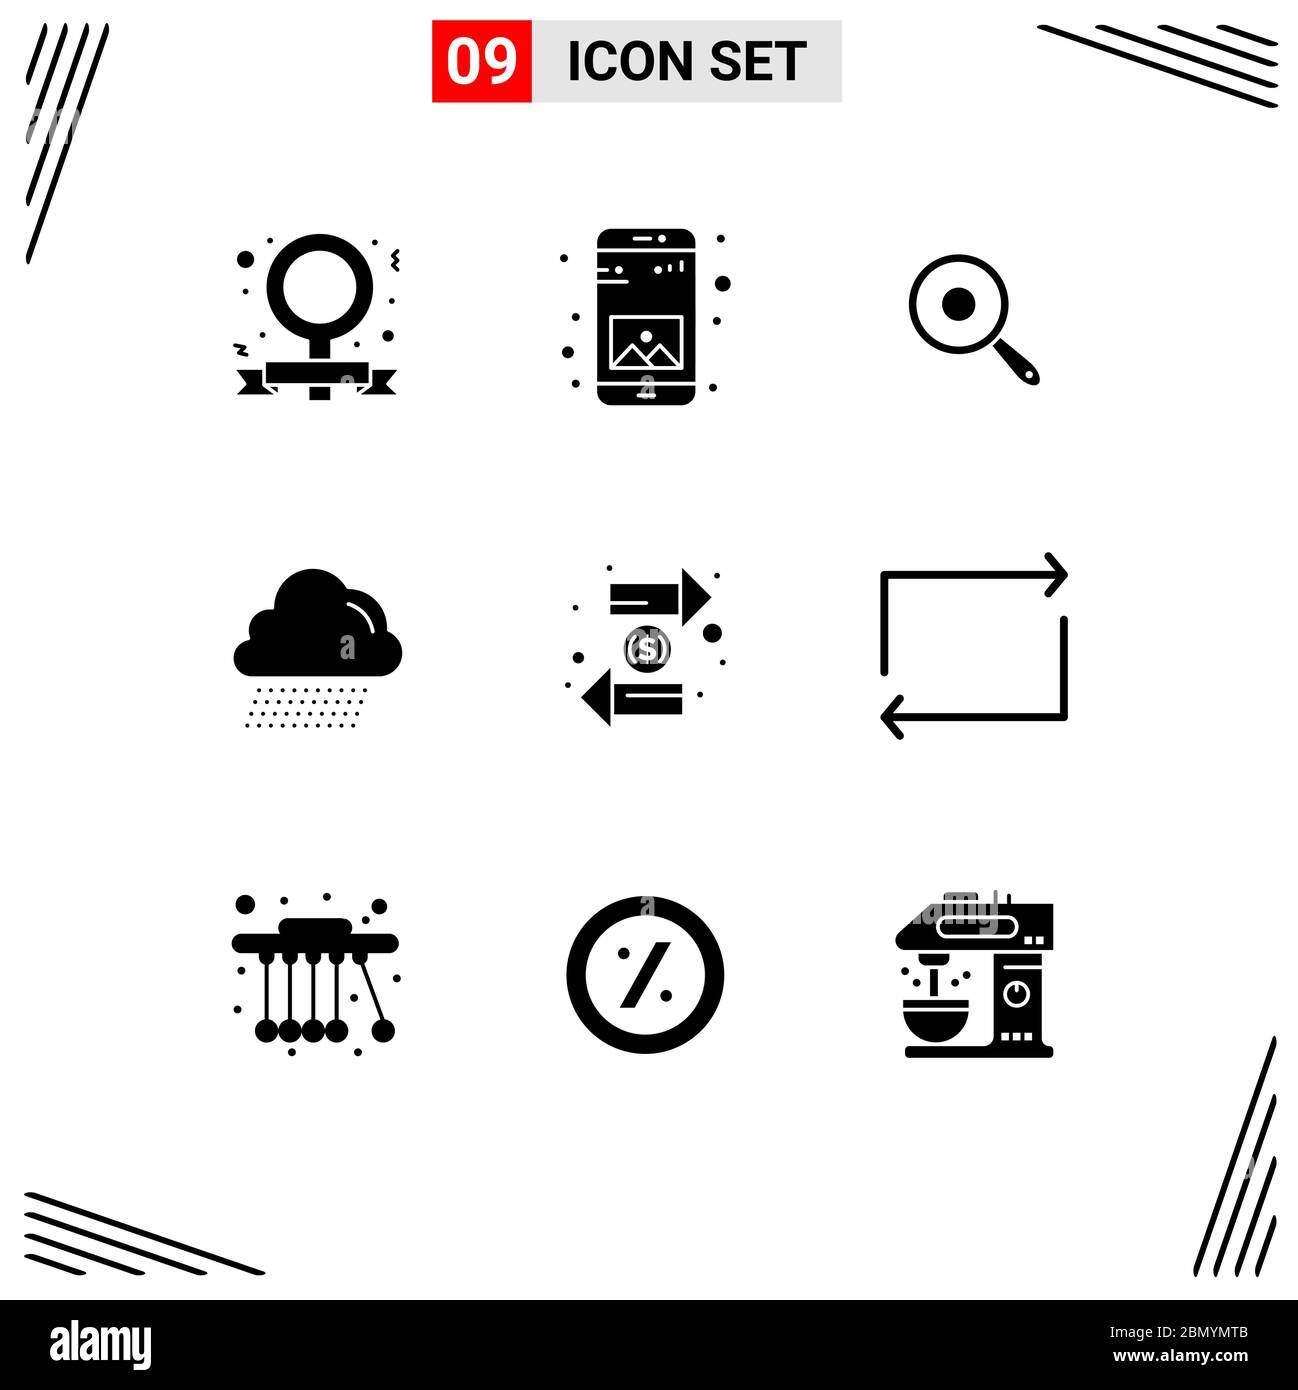 Pictogram Set of 9 Simple Solid Glyphs of exchange, coin, pan, canada, cloud Editable Vector Design Elements Stock Vector